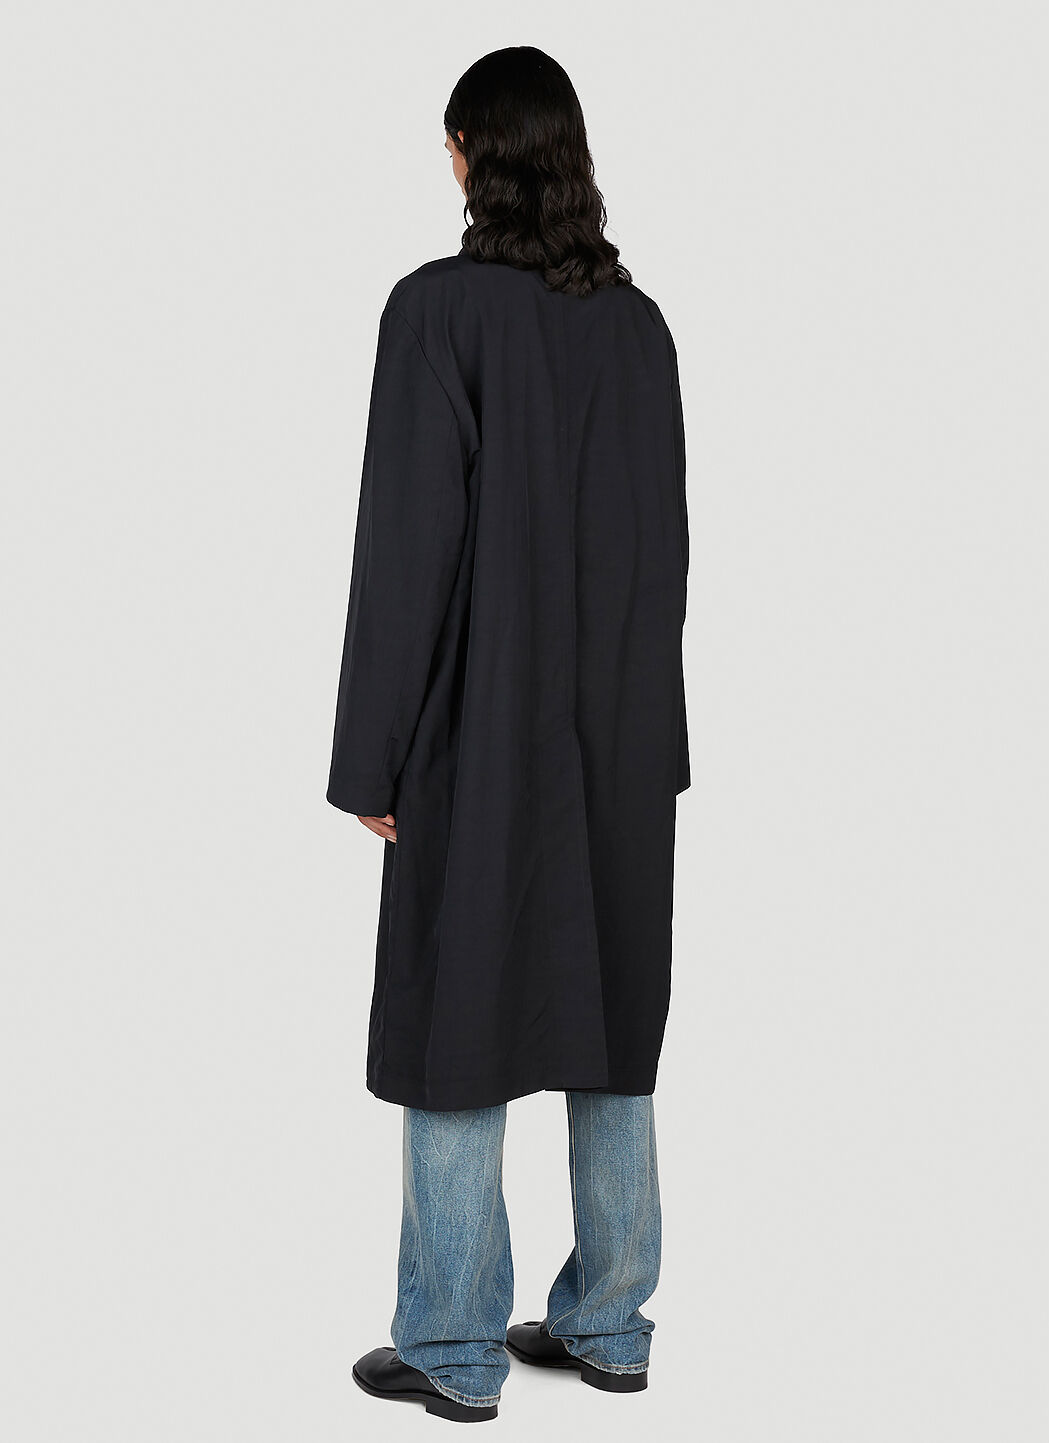 MM6 Maison Margiela Oversized Pocket Trench Coat in Black | LN-CC®